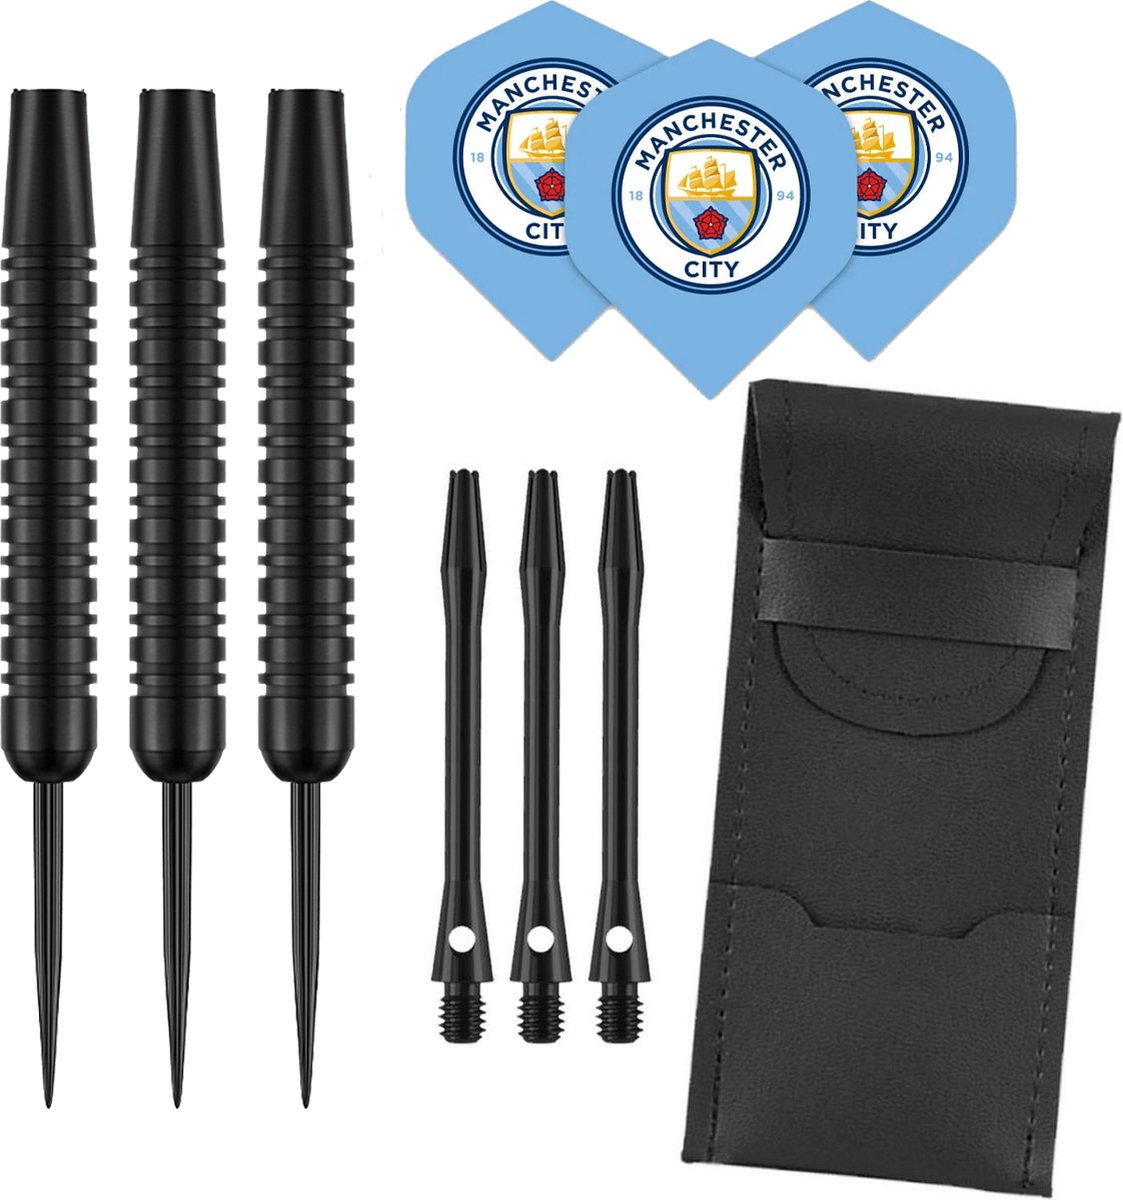 Dragon Darts Black - dartpijlen - Manchester City - dart shafts - dart flights - 23 gram - dartspijlen